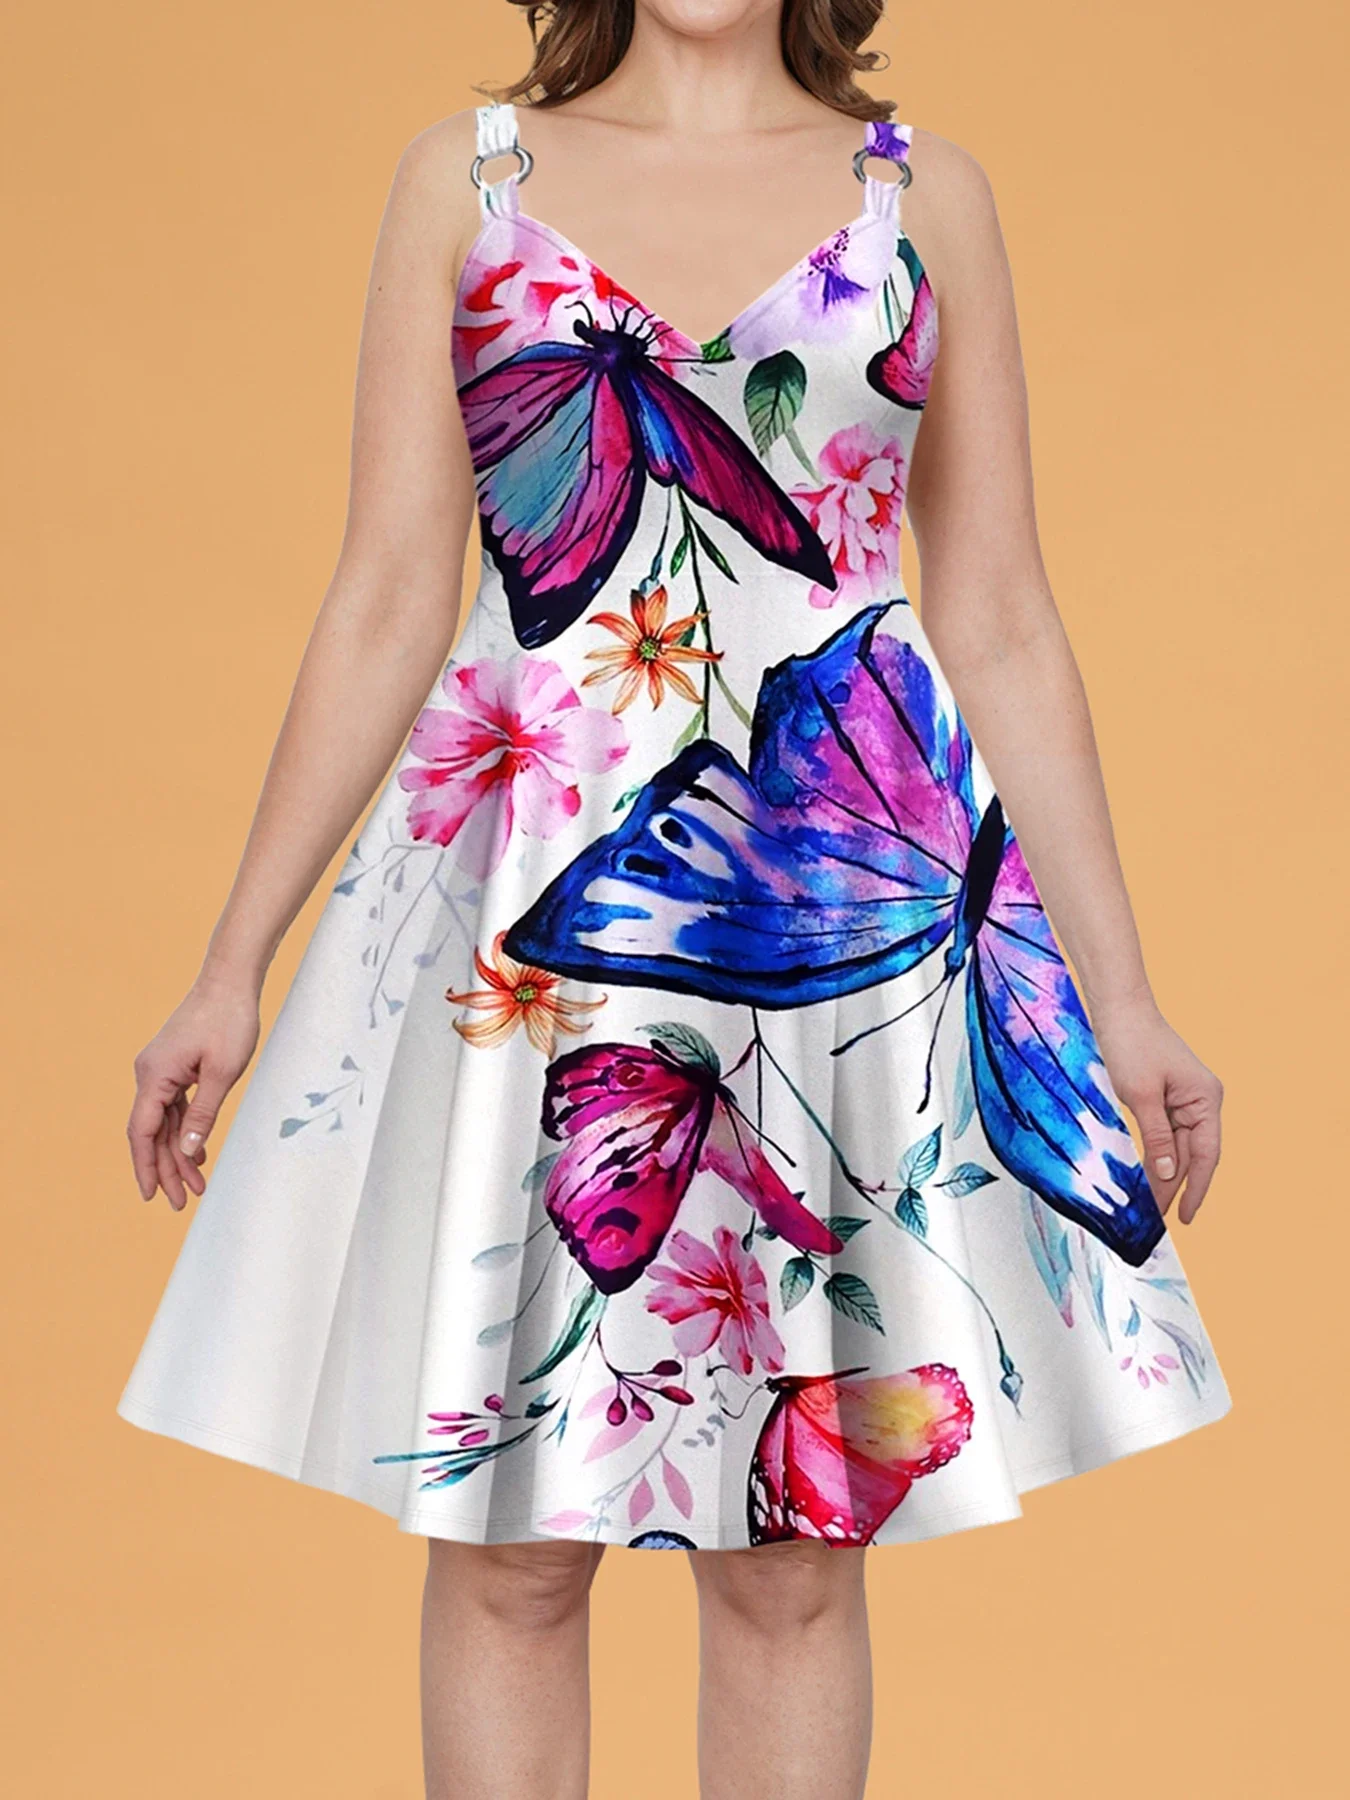 

Women's Tank Dress Butterfly Printing A-Line Pleated Midi Dress Summer Plus Size Casual Elegant Sleeveless V-Neck Vintage Dress